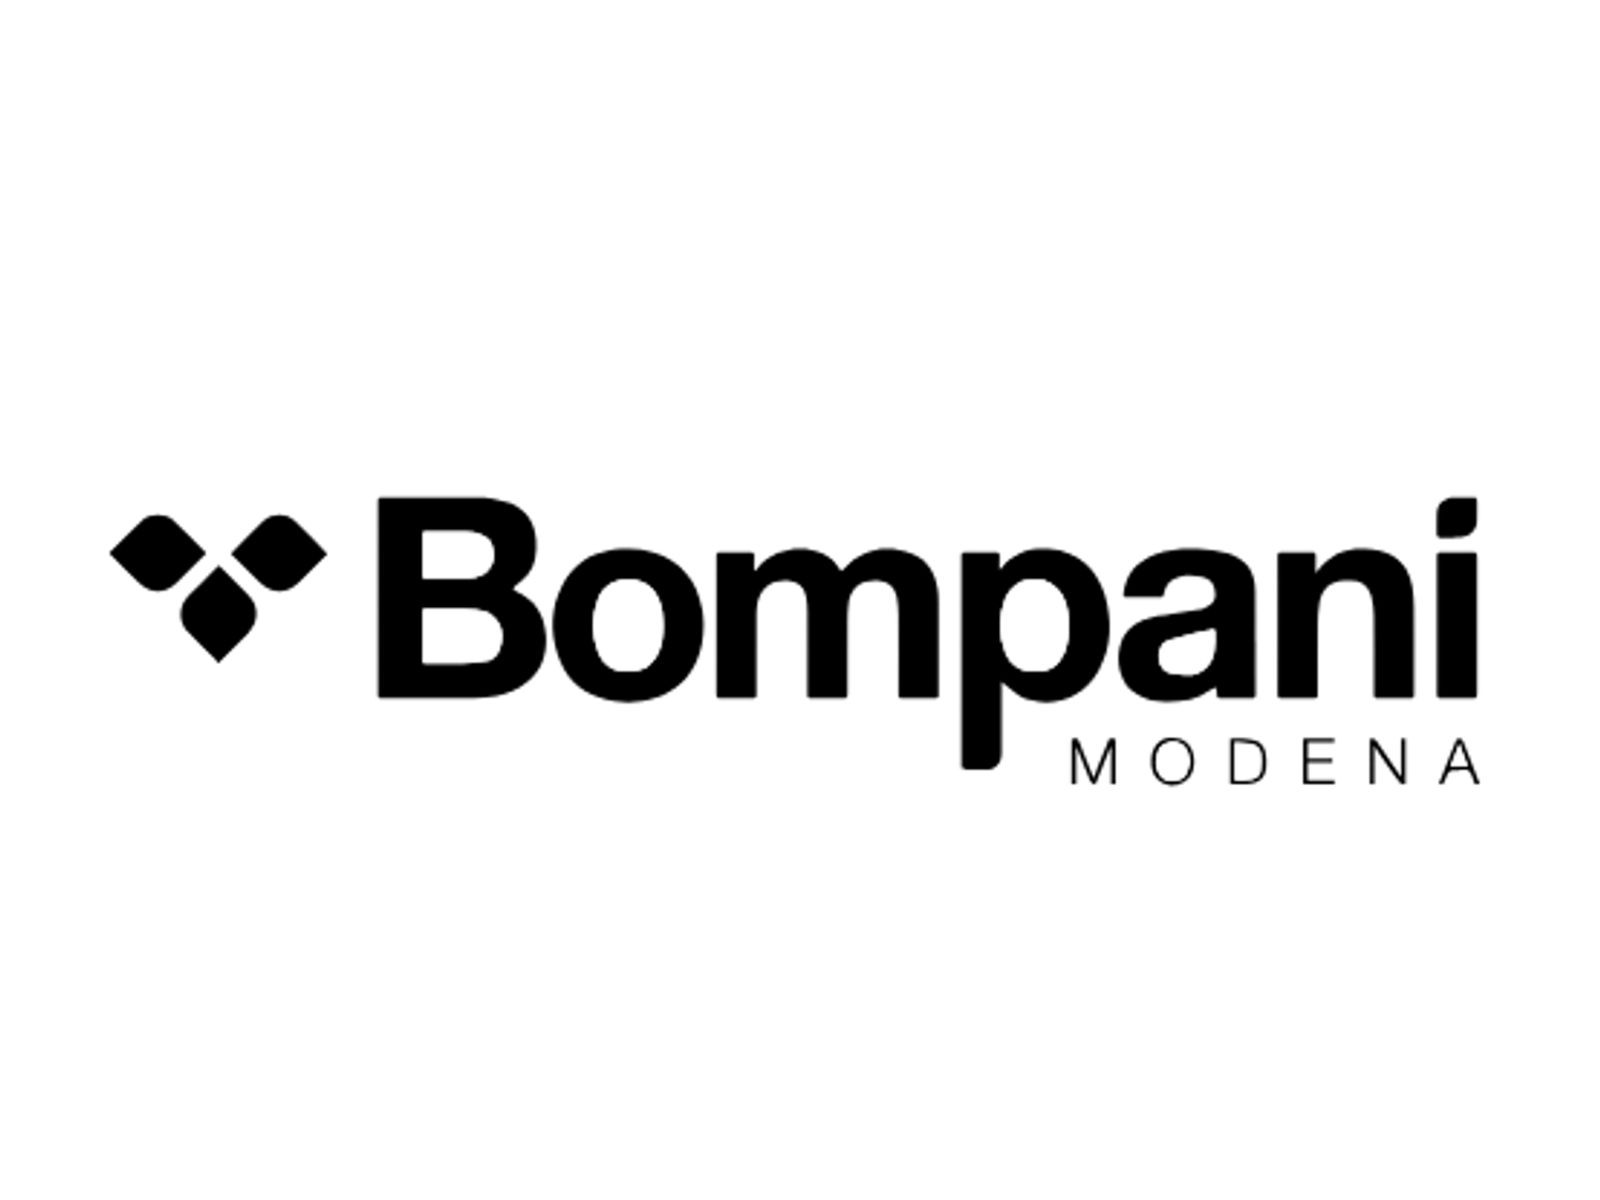 Bompani